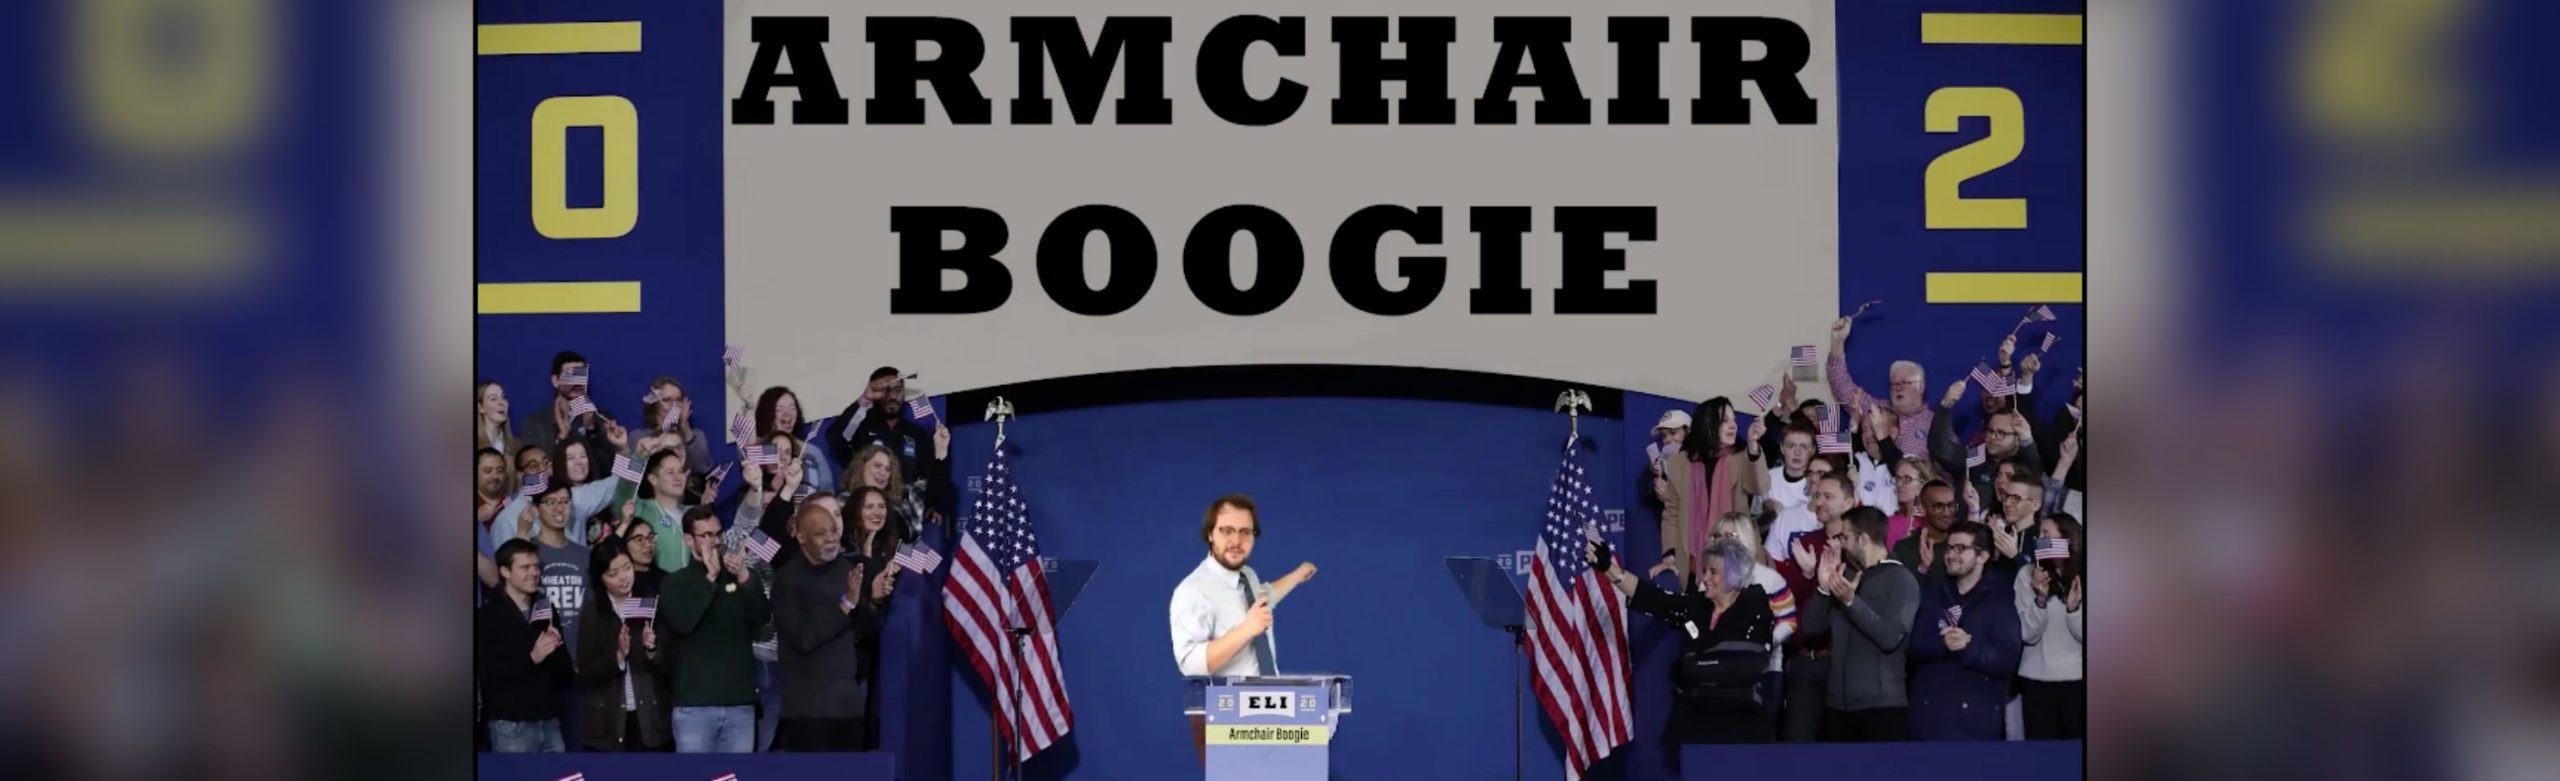 Watch Armchair Boogie Spoof Howard Dean’s Infamous Scream Speech Image